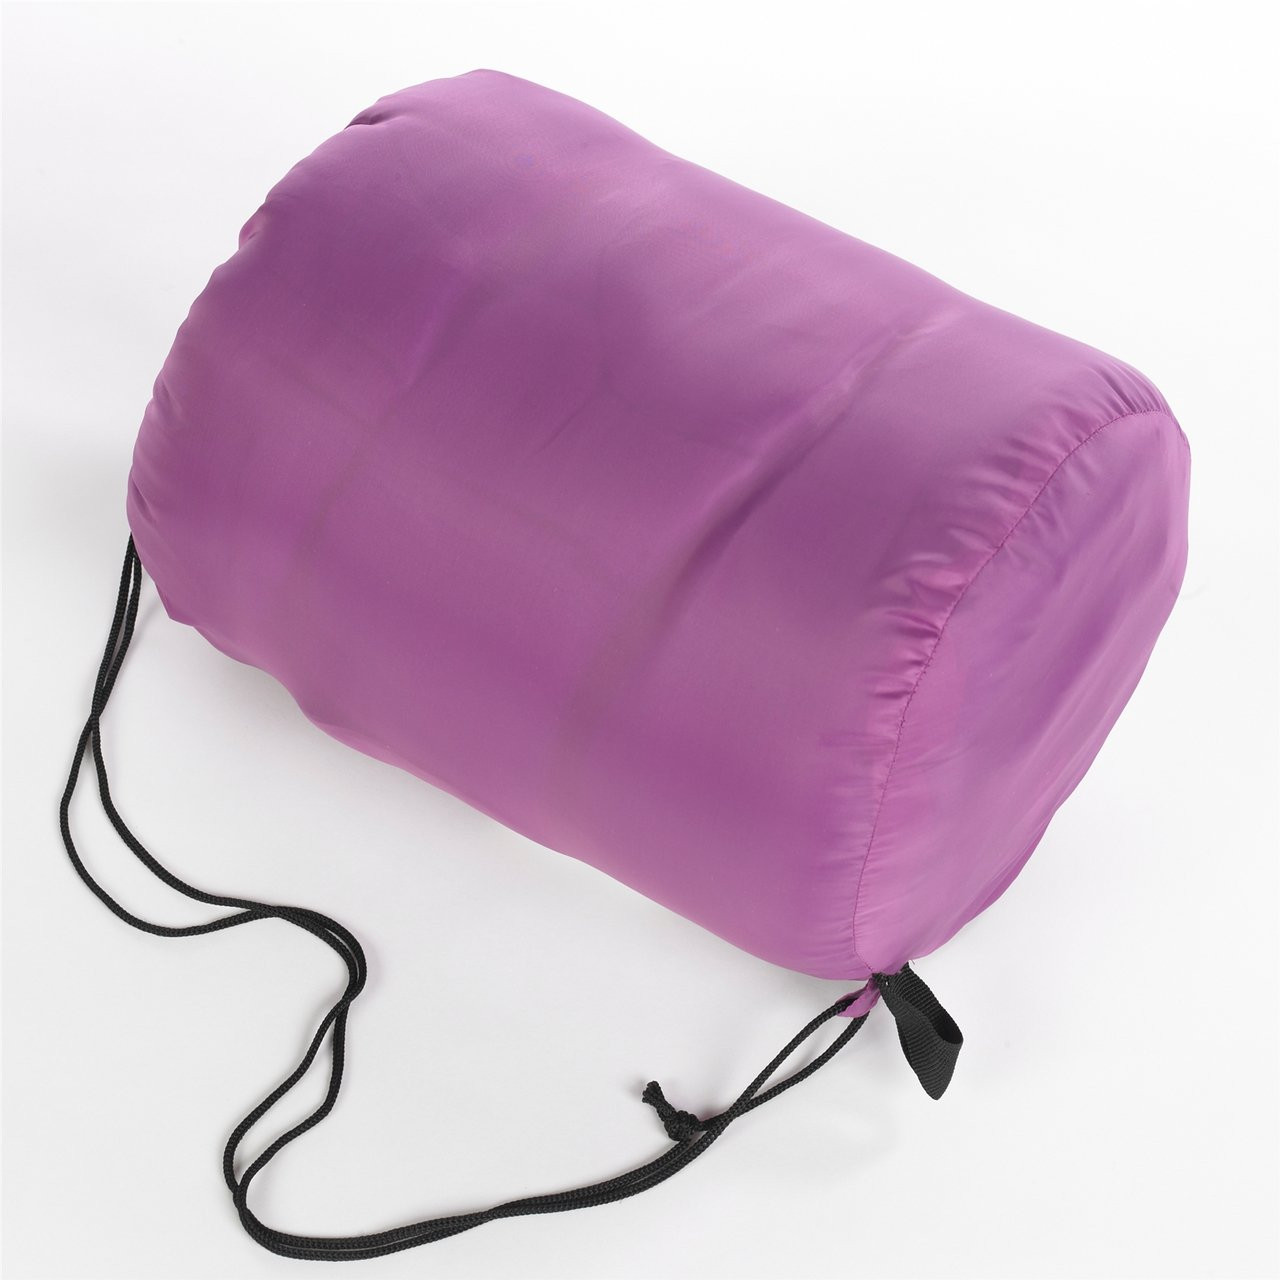 purple sleeping bag